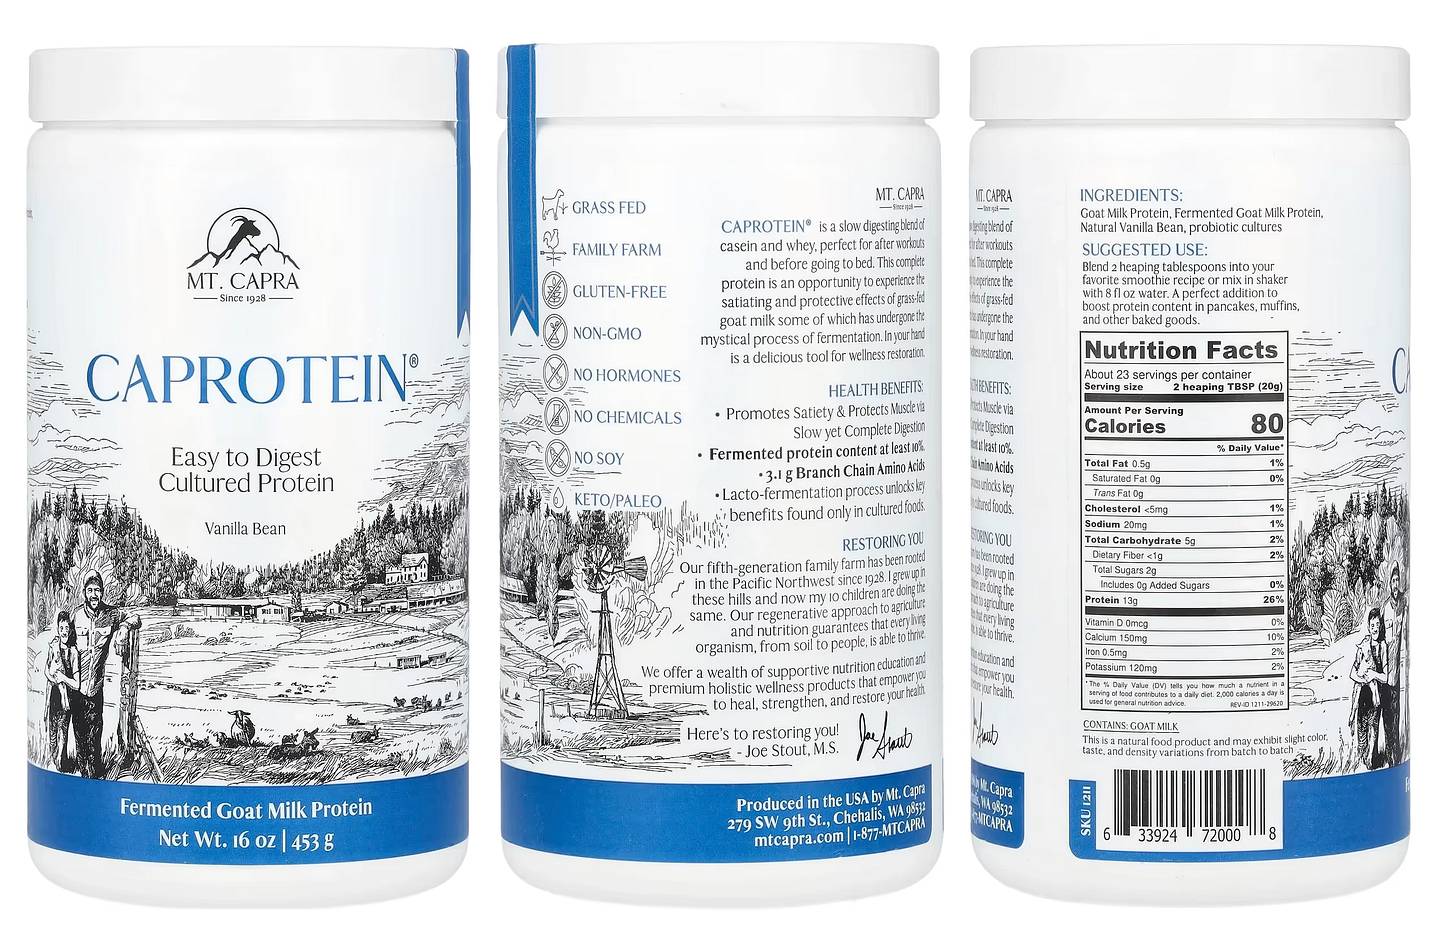 Mt. Capra, Caprotein, Fermented Goat-Milk Protein, Vanilla Bean packaging